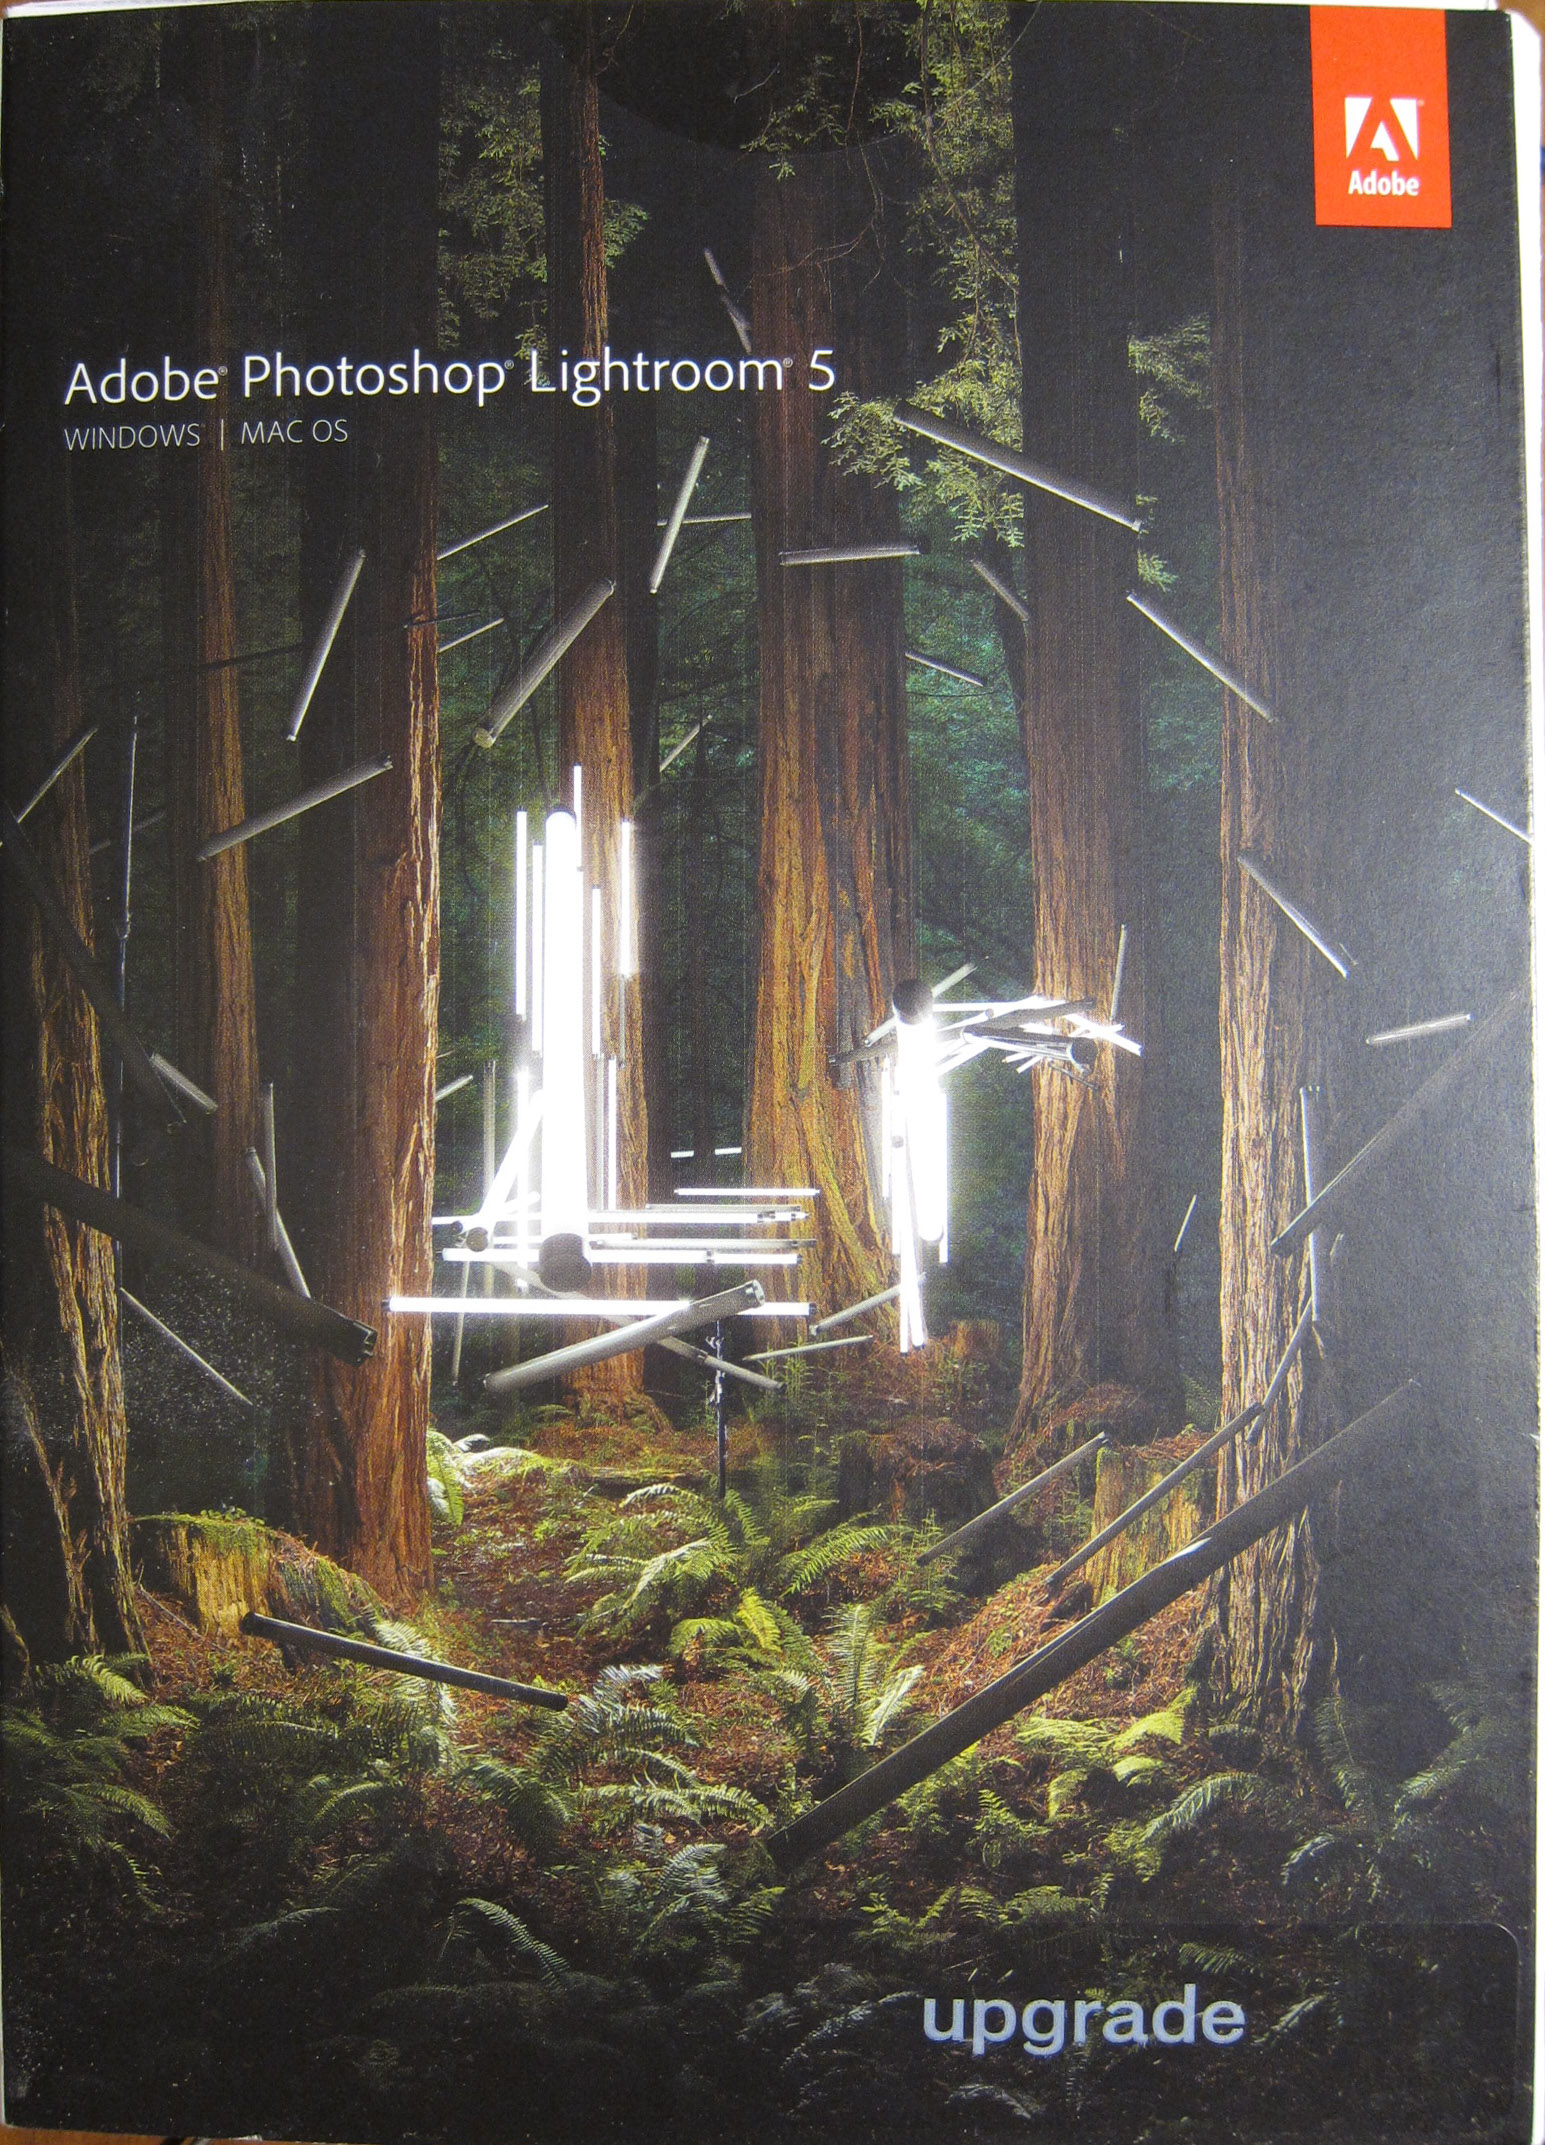 adobe photoshop lightroom 5.7.1 check